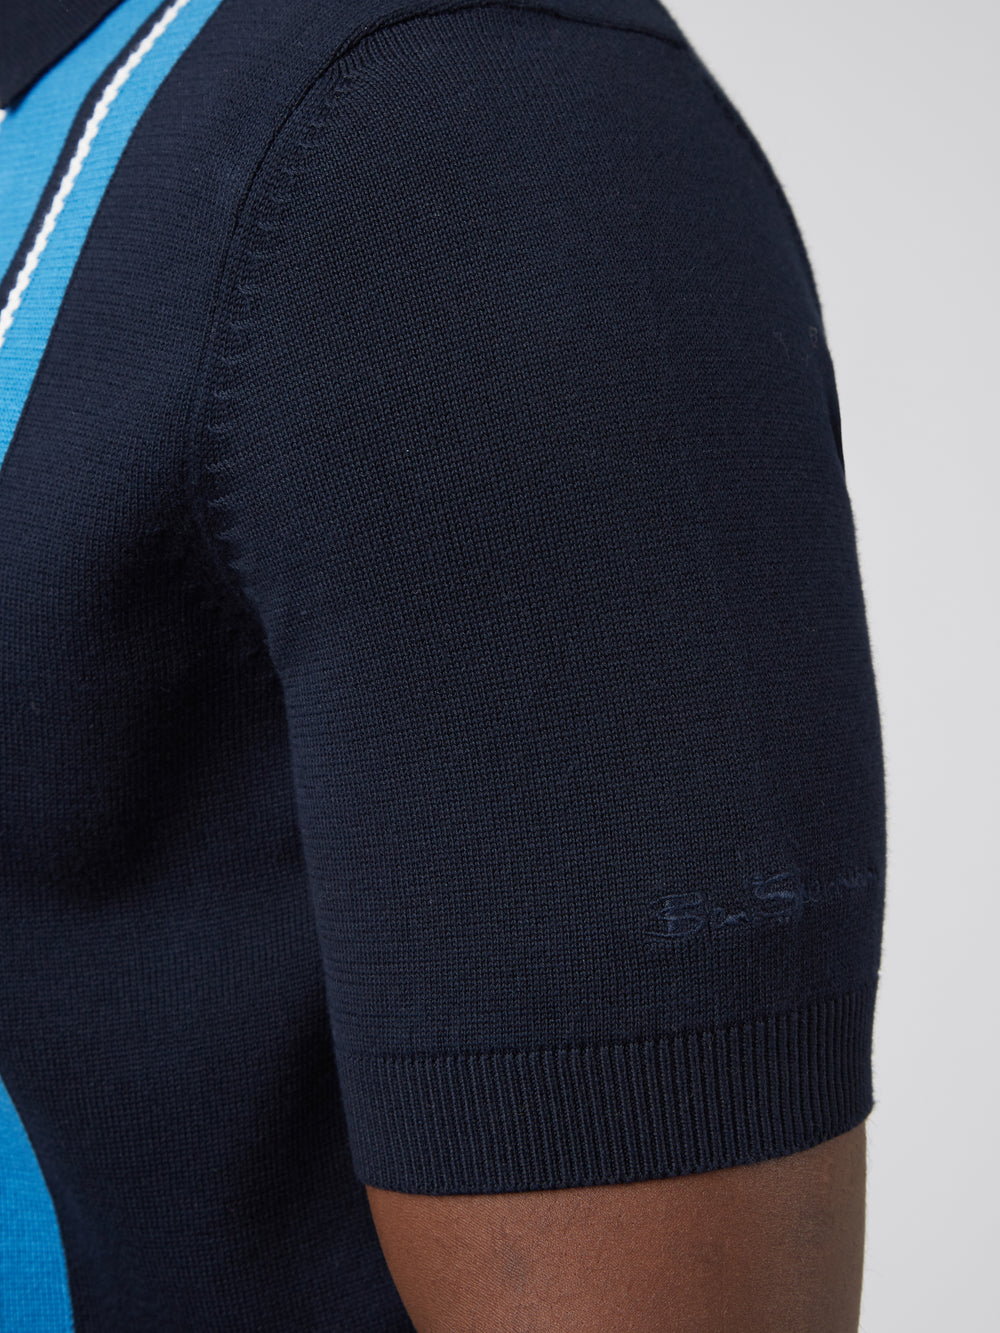 Iconic Vertical Stripe Mod Knit Polo - Dark Navy - Ben Sherman